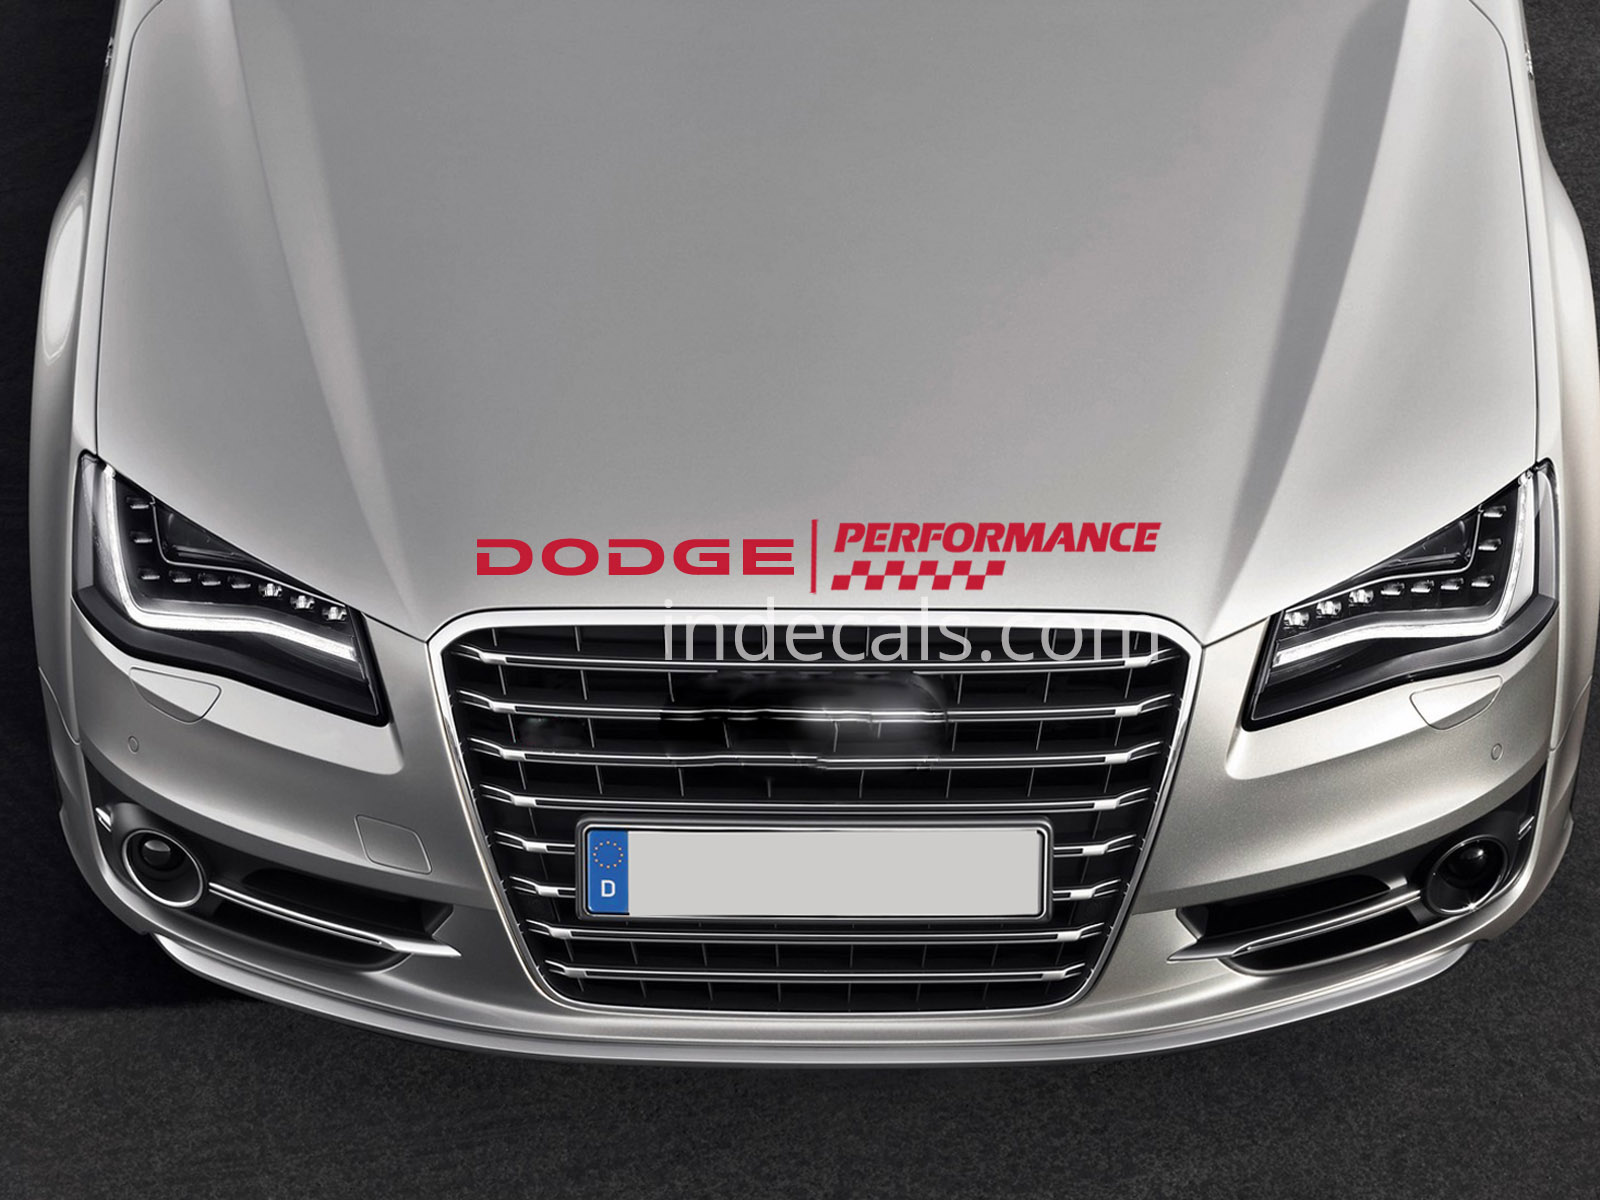 1 x Dodge Performance Sticker for Bonnet - Red